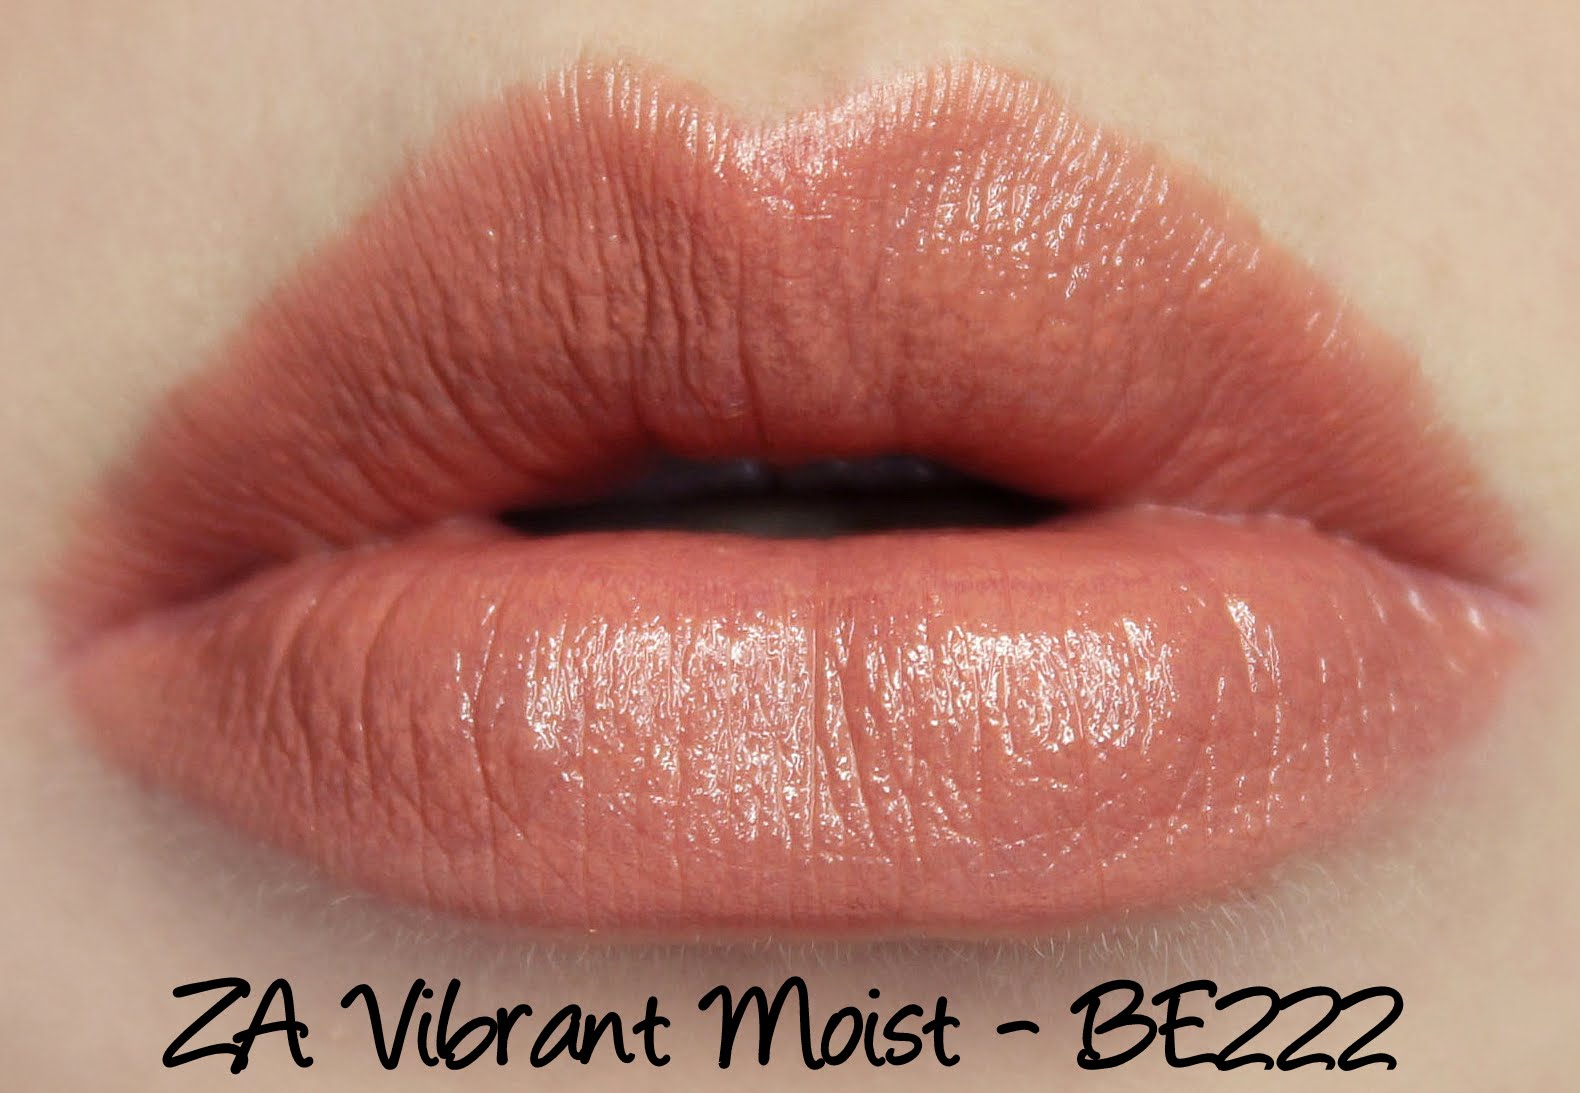 ZA Vibrant Moist Lipstick - BE222 swatches & review